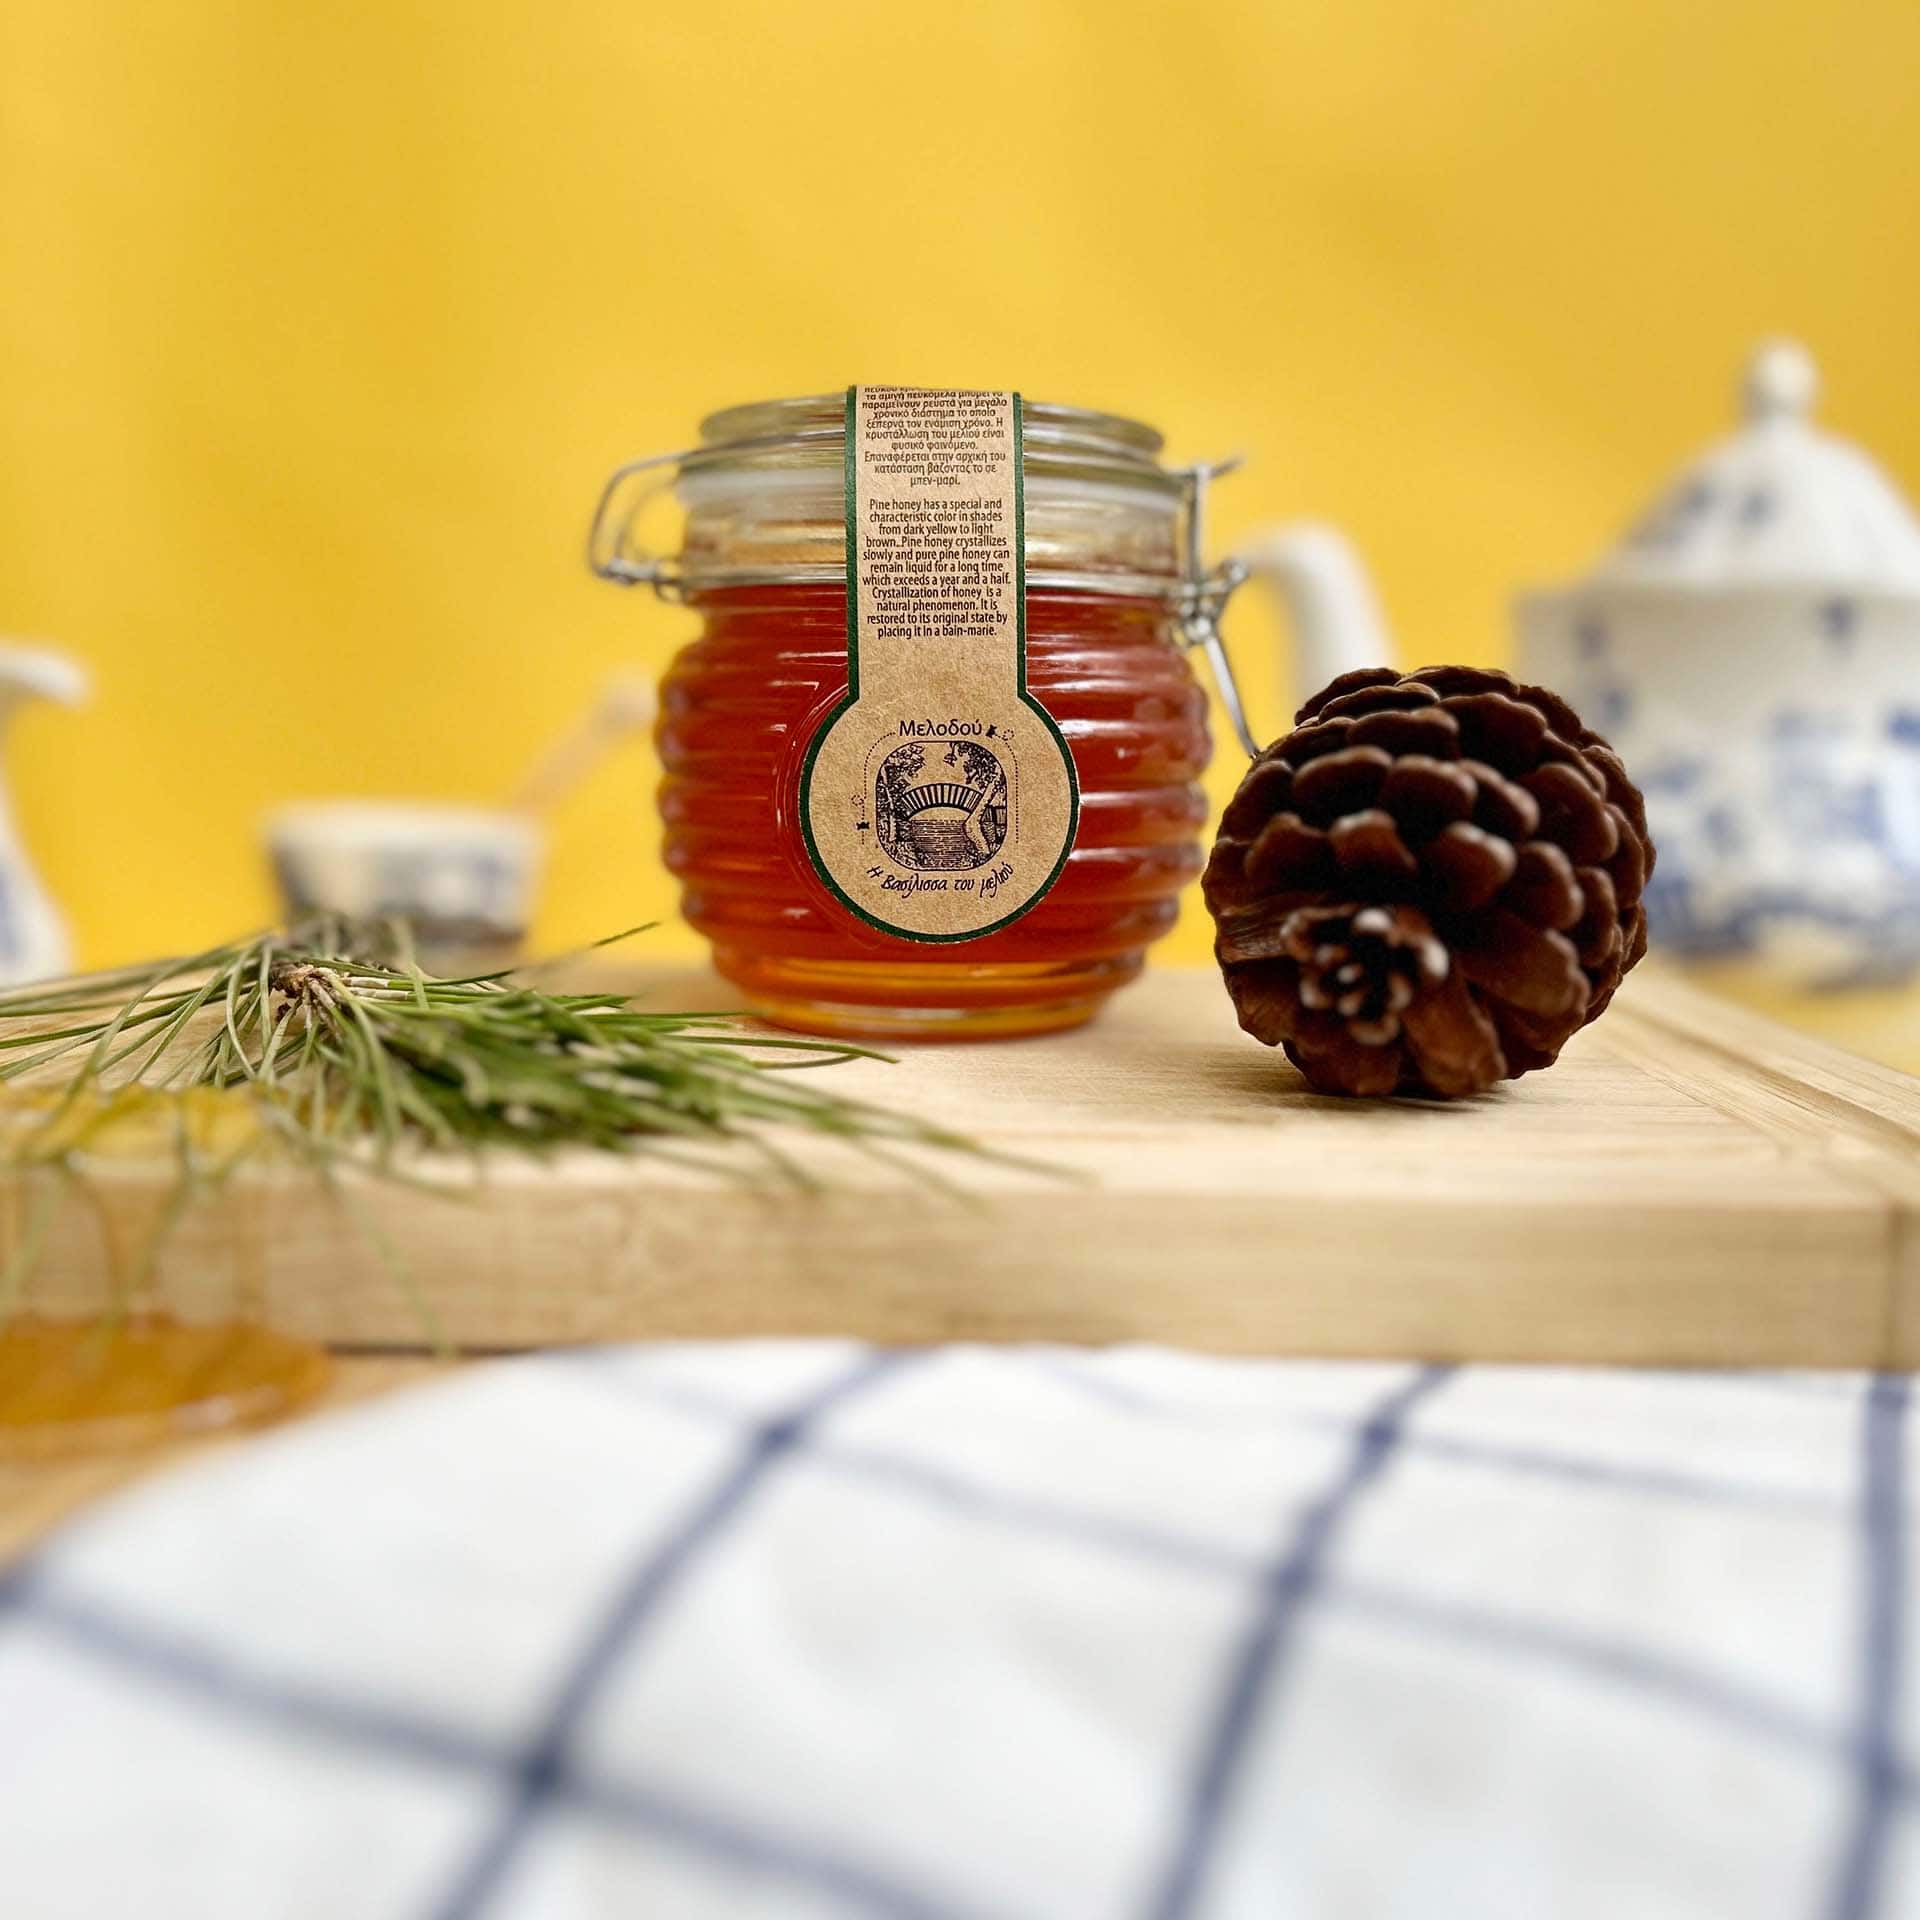 Melodou Cyprus Pine Honey 450g Glass Jar